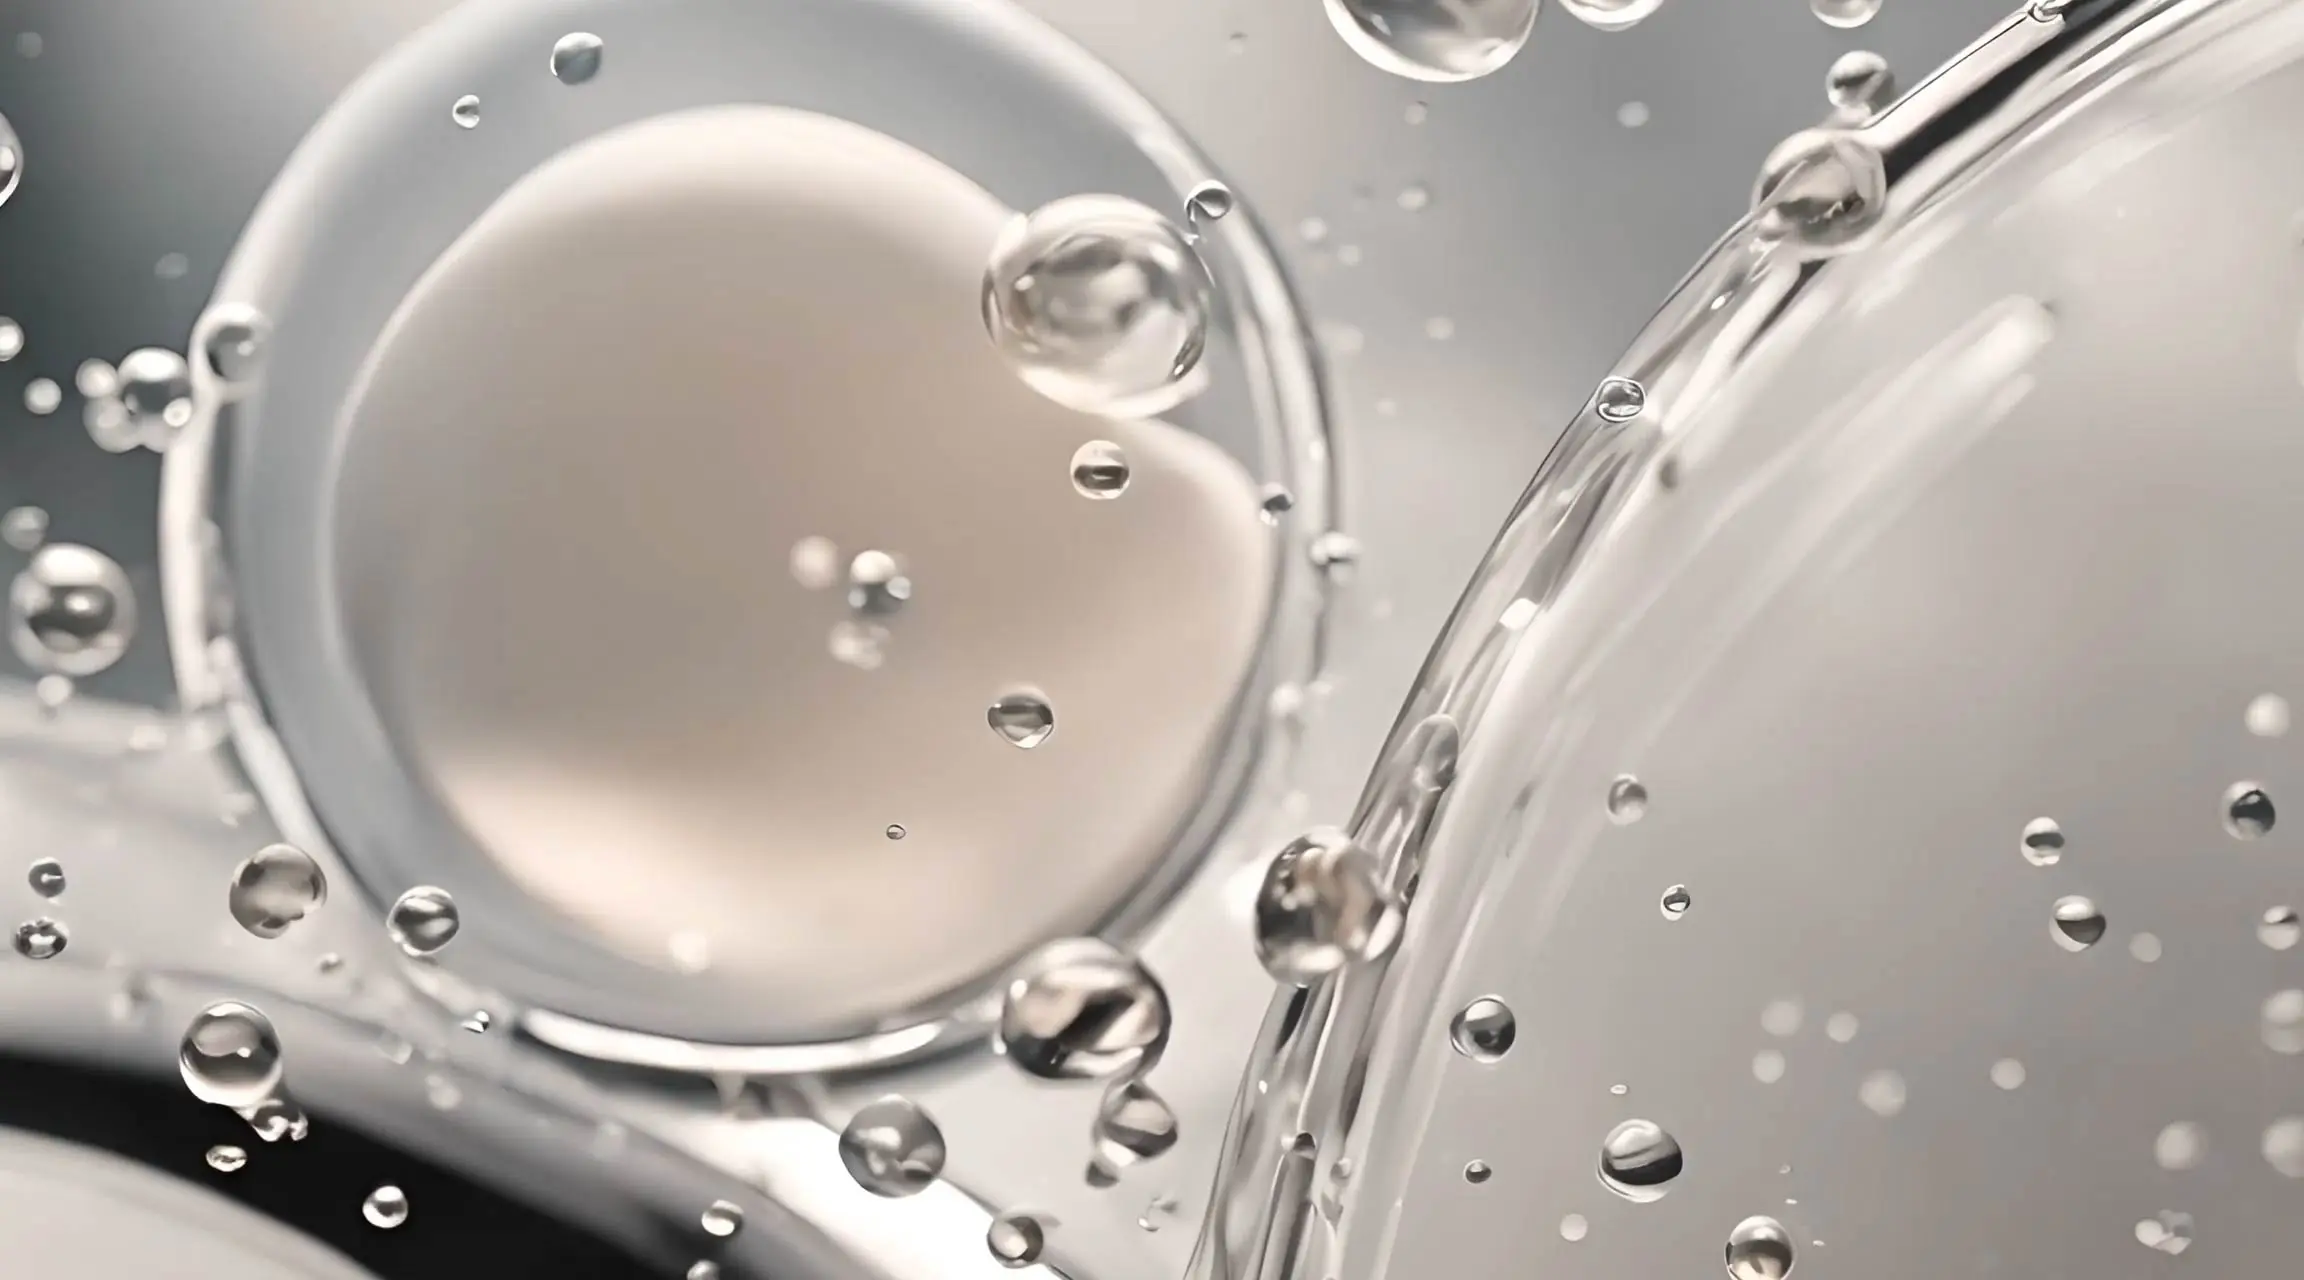 Water Bubbles in Slow Motion